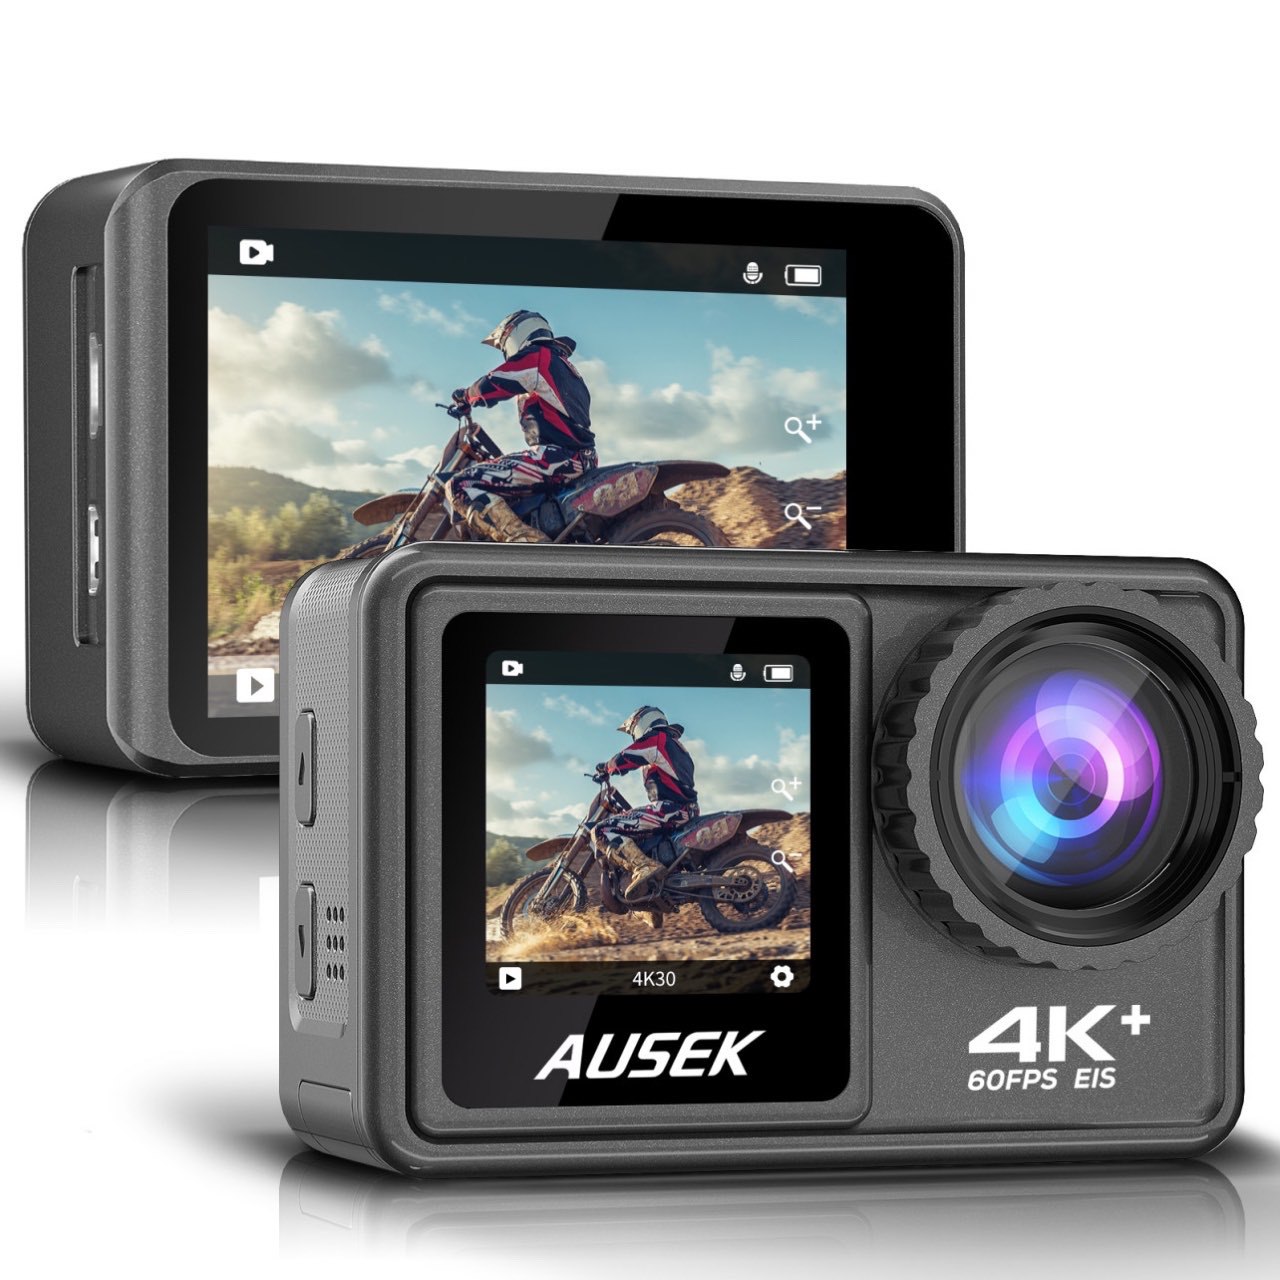 ASUEK filter, action camera, waterproof and stabilization, action camera, outdoor camera, motorcycle recorder